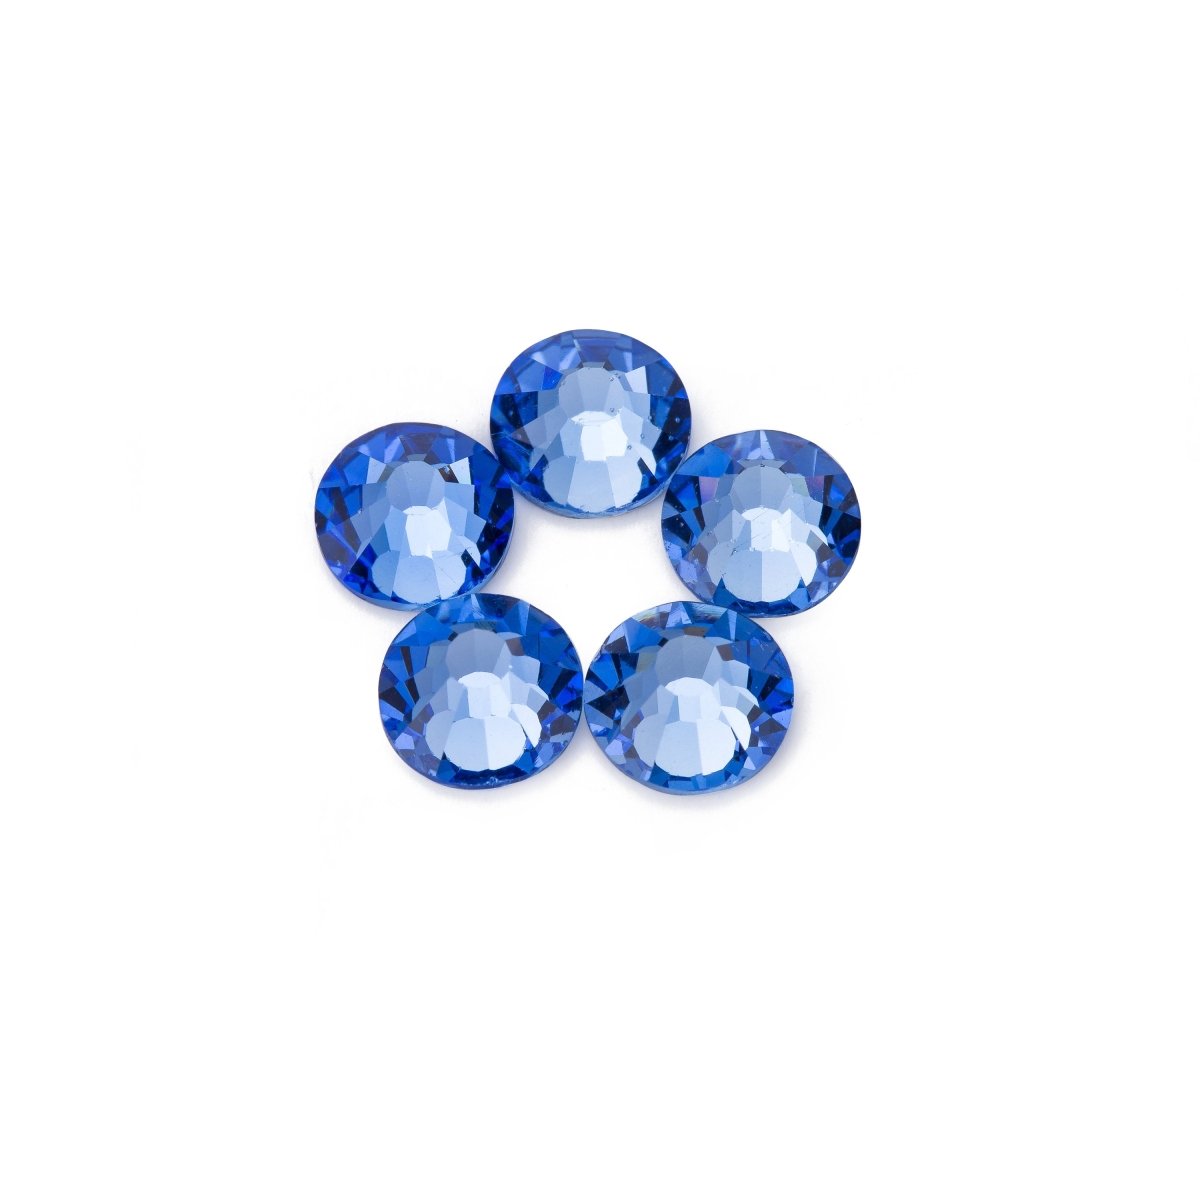 1440 pcs High Quality Crystal Light Blue Sapphire Rhinestones Loose Crystal flatback No Hot Fix glass bead Size ss 10 / ss 12 / ss 16 / ss20, SS10-LTSAPPHIRE - DLUXCA